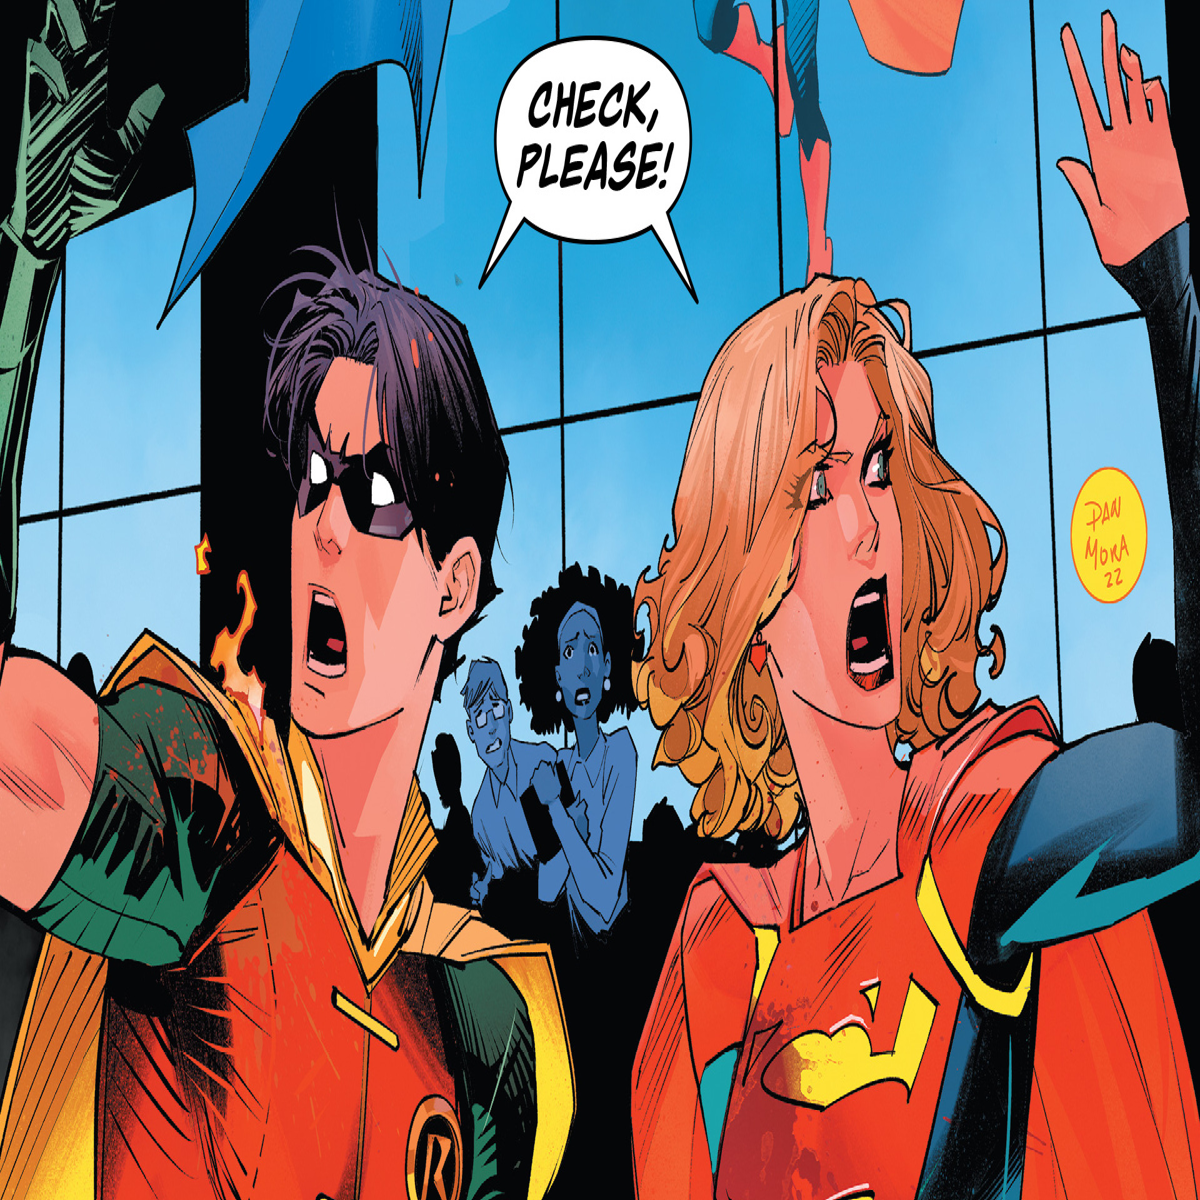 DC Super Hero Girls Universe Launching for Female Comic Fans